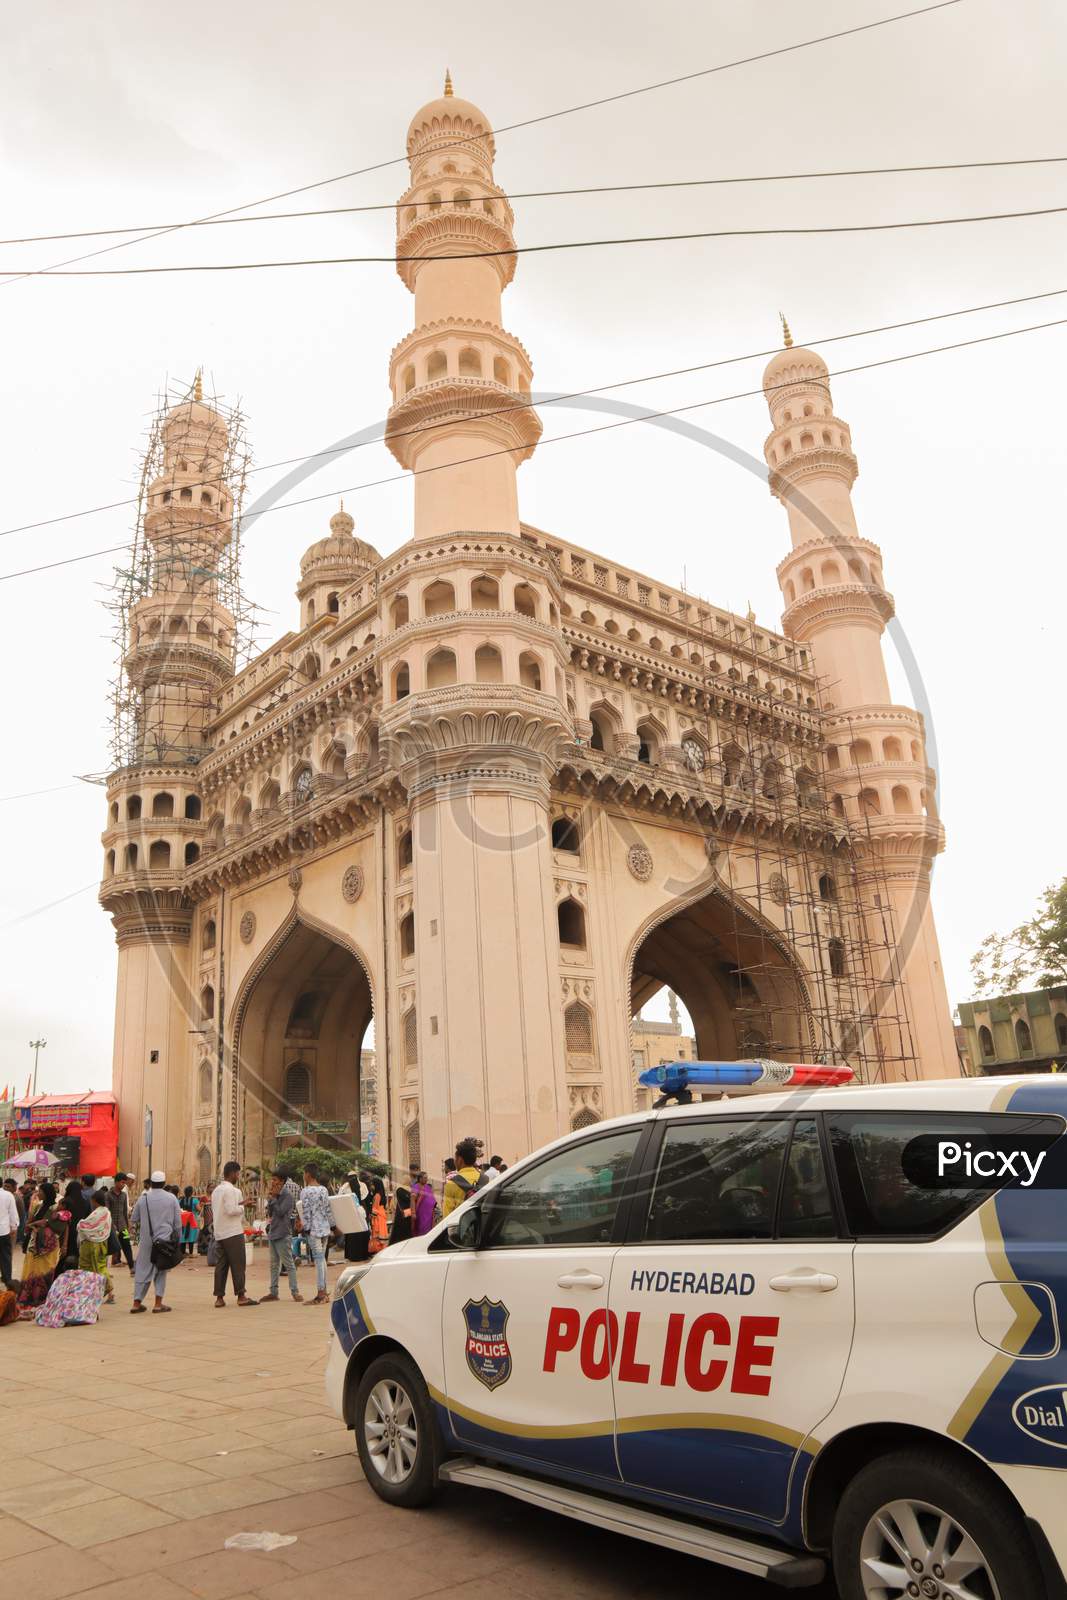 Telangana Police Vehicle Near To Historic Charminar Monument In Hyderabad, India